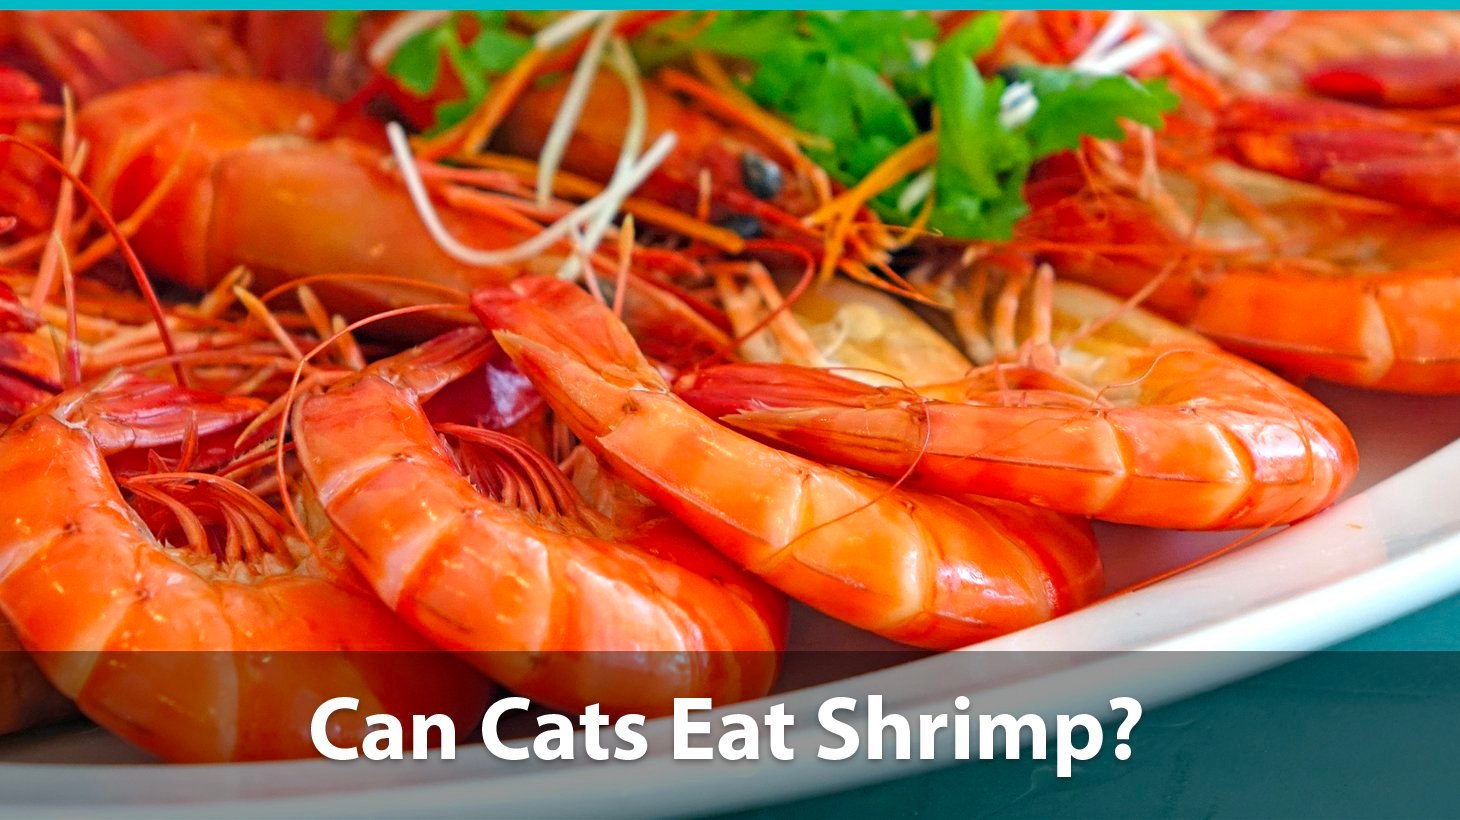 Can cat eat shrimp?